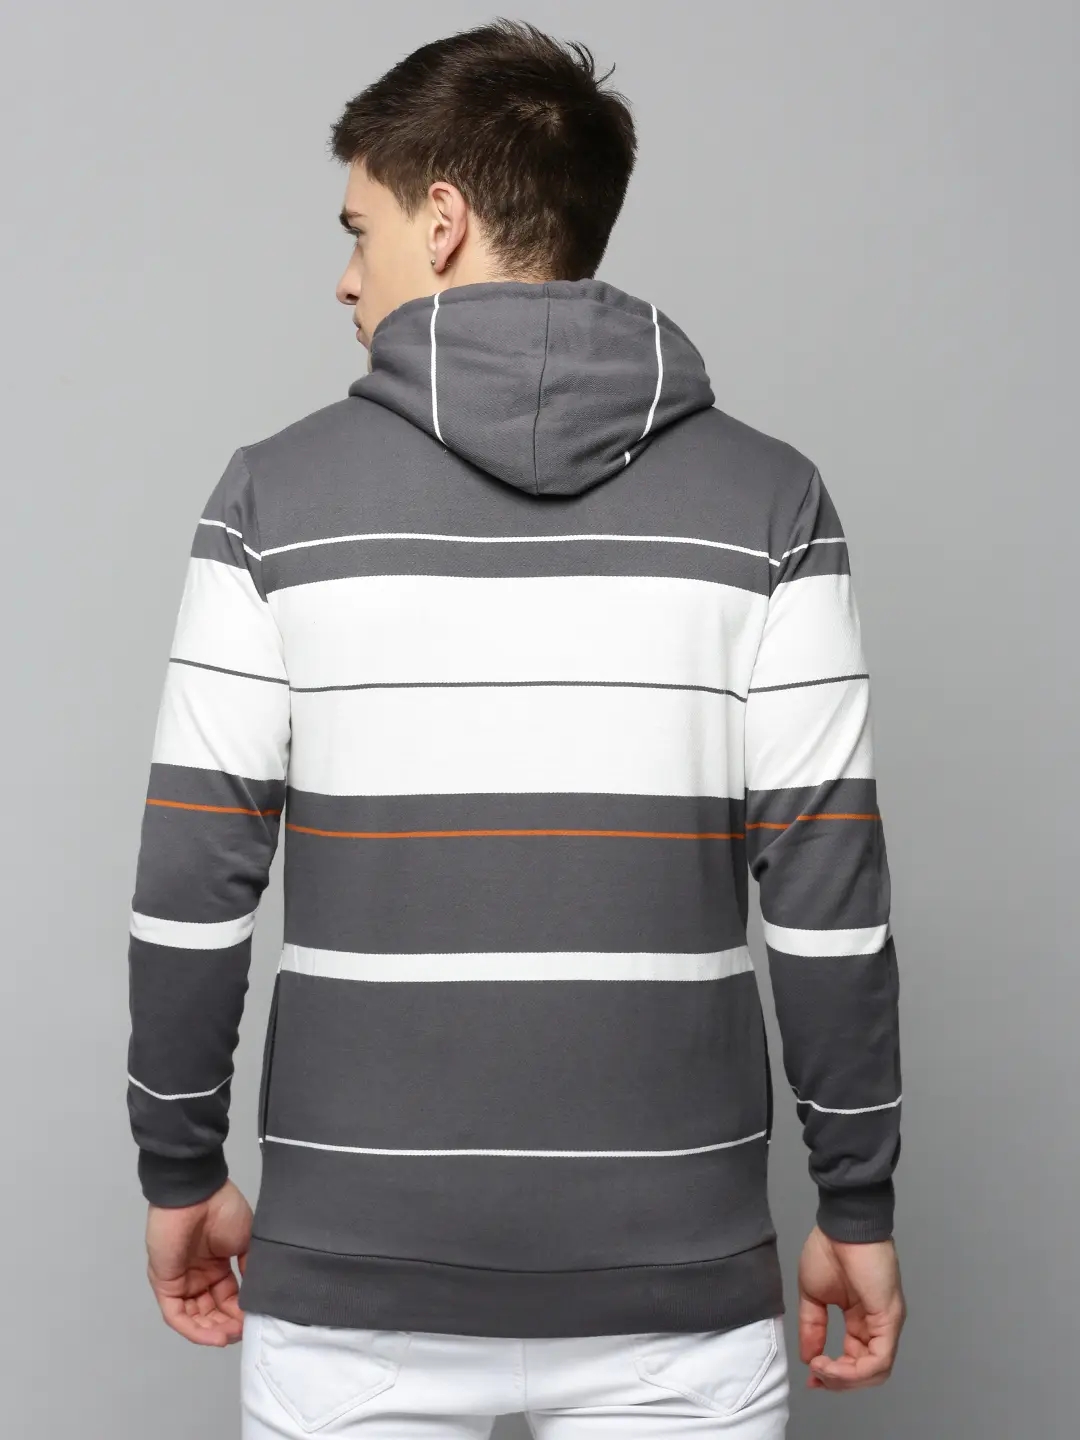 SHOWOFF Men's Hooded Striped Grey Pullover Sweatshirt